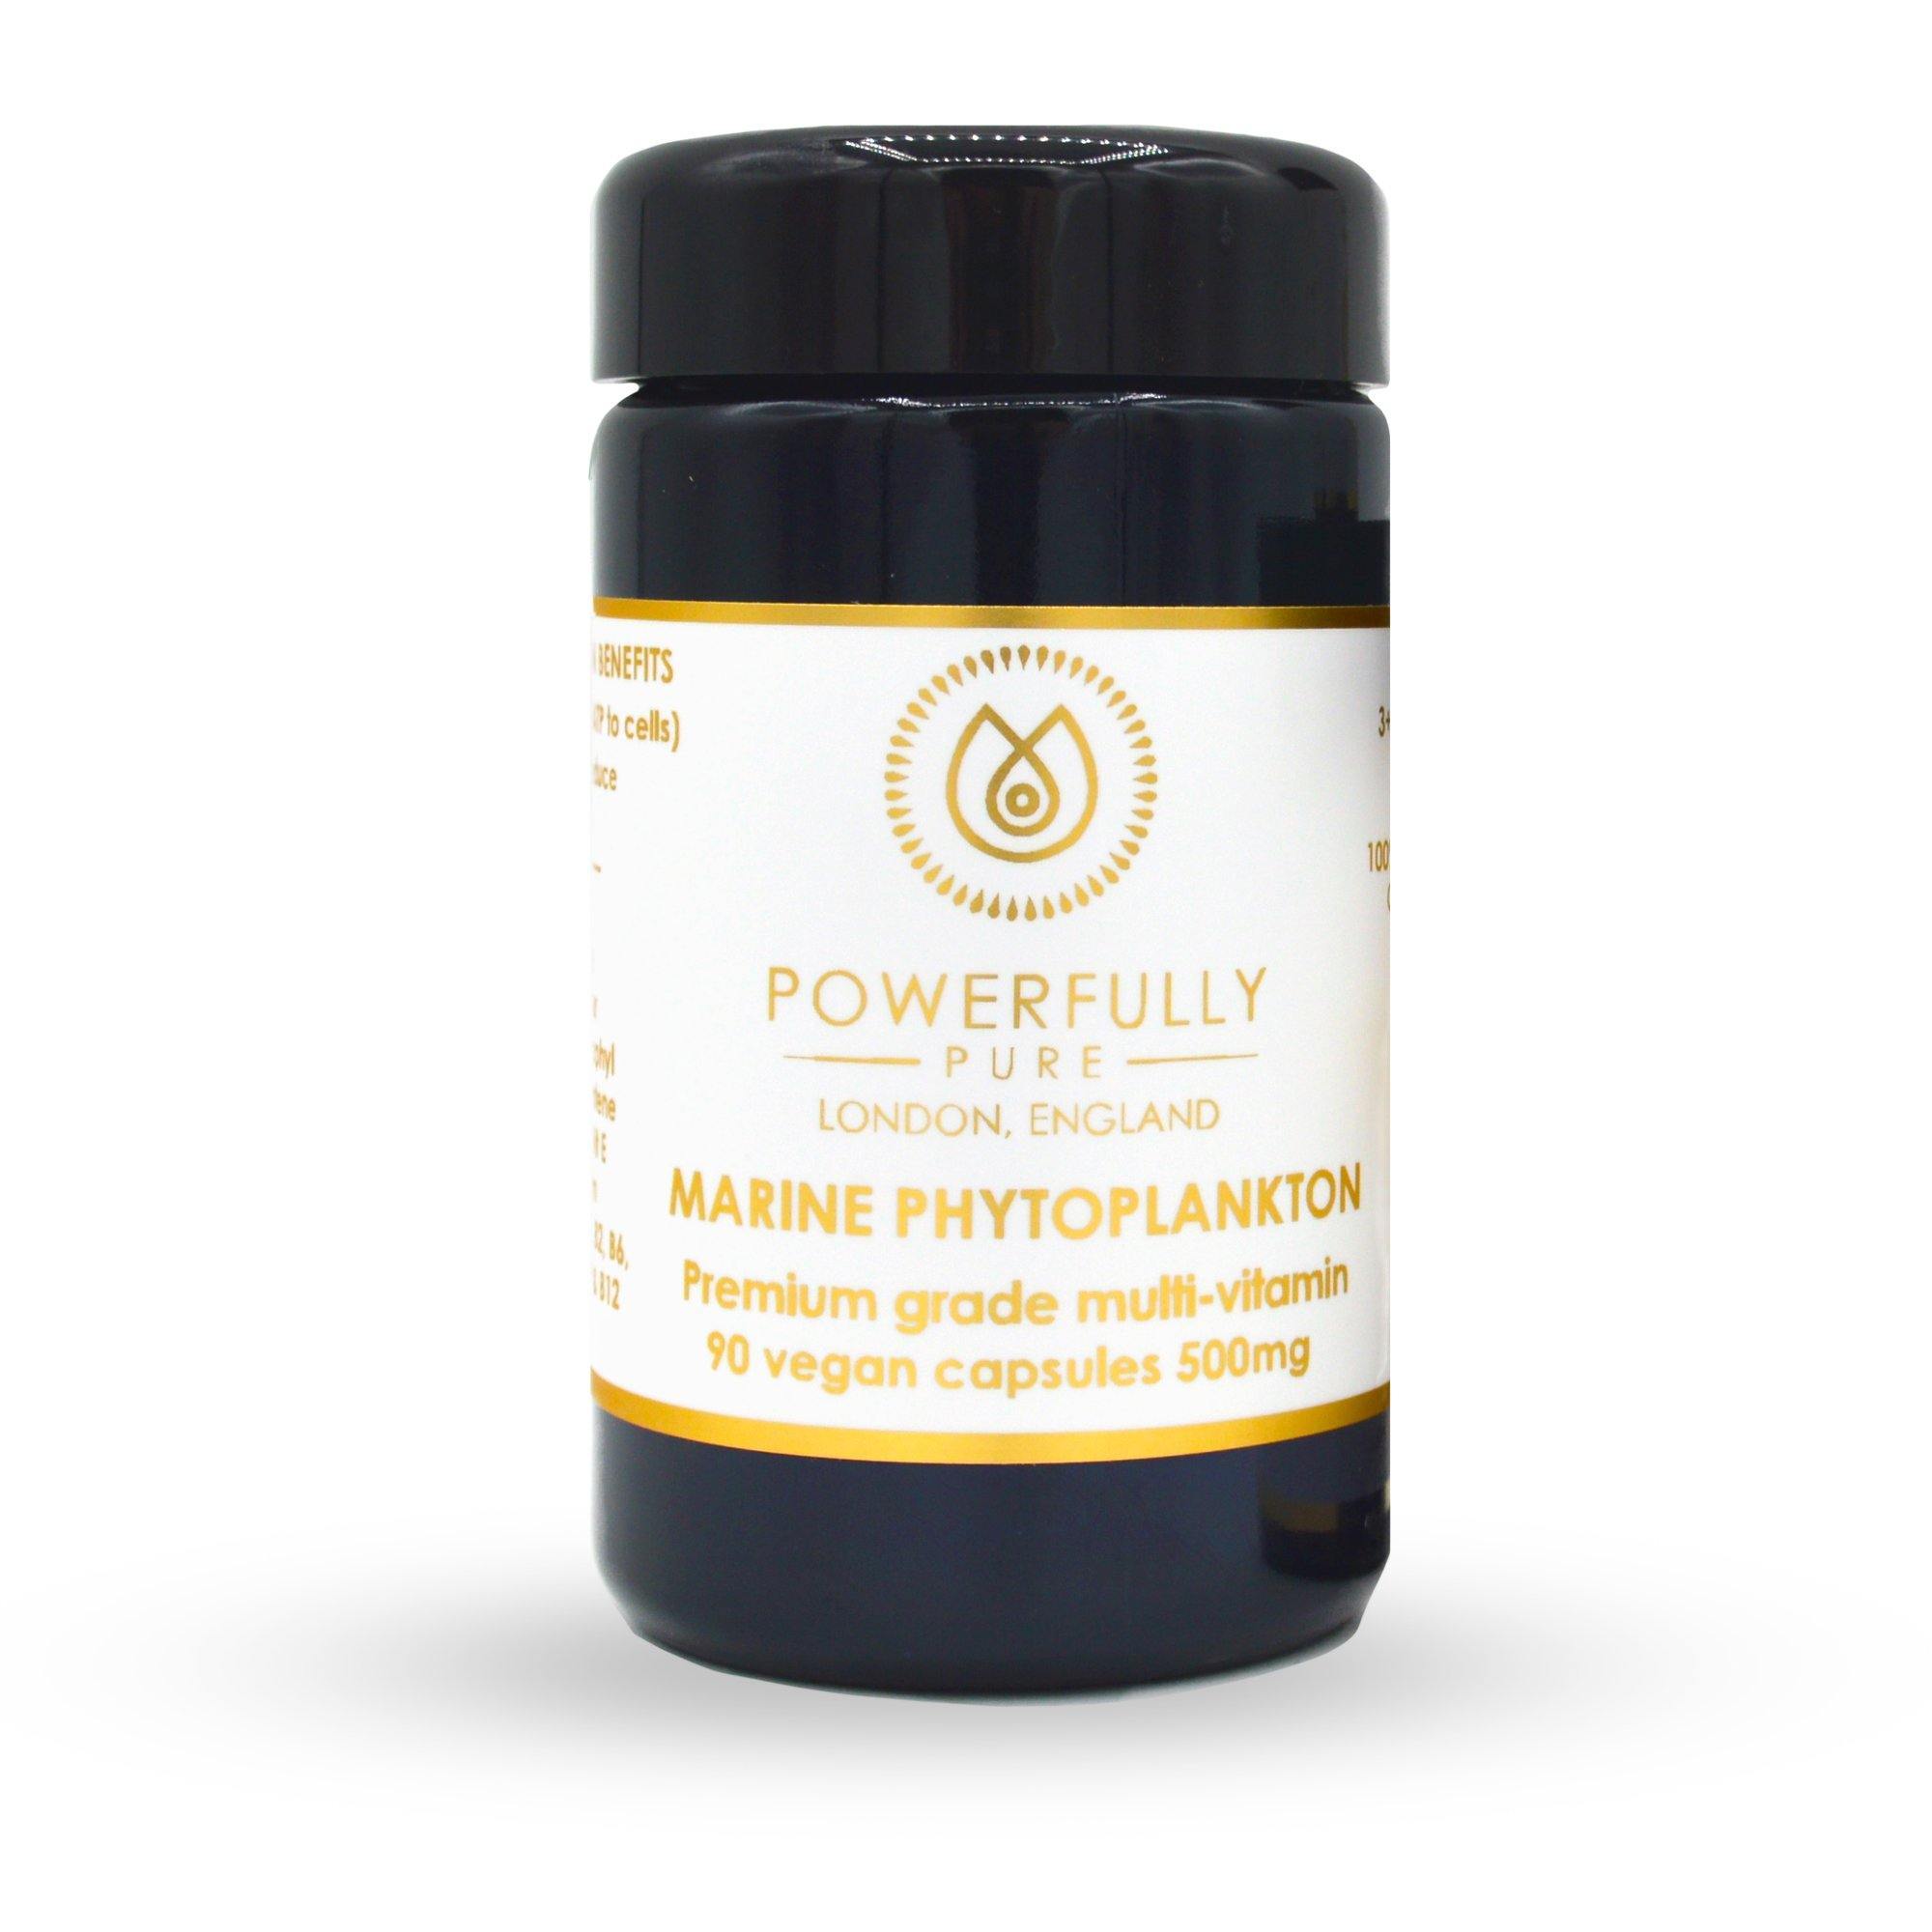 Supplement - Marine Phytoplankton Capsules (Organic) - Powerfully Pure